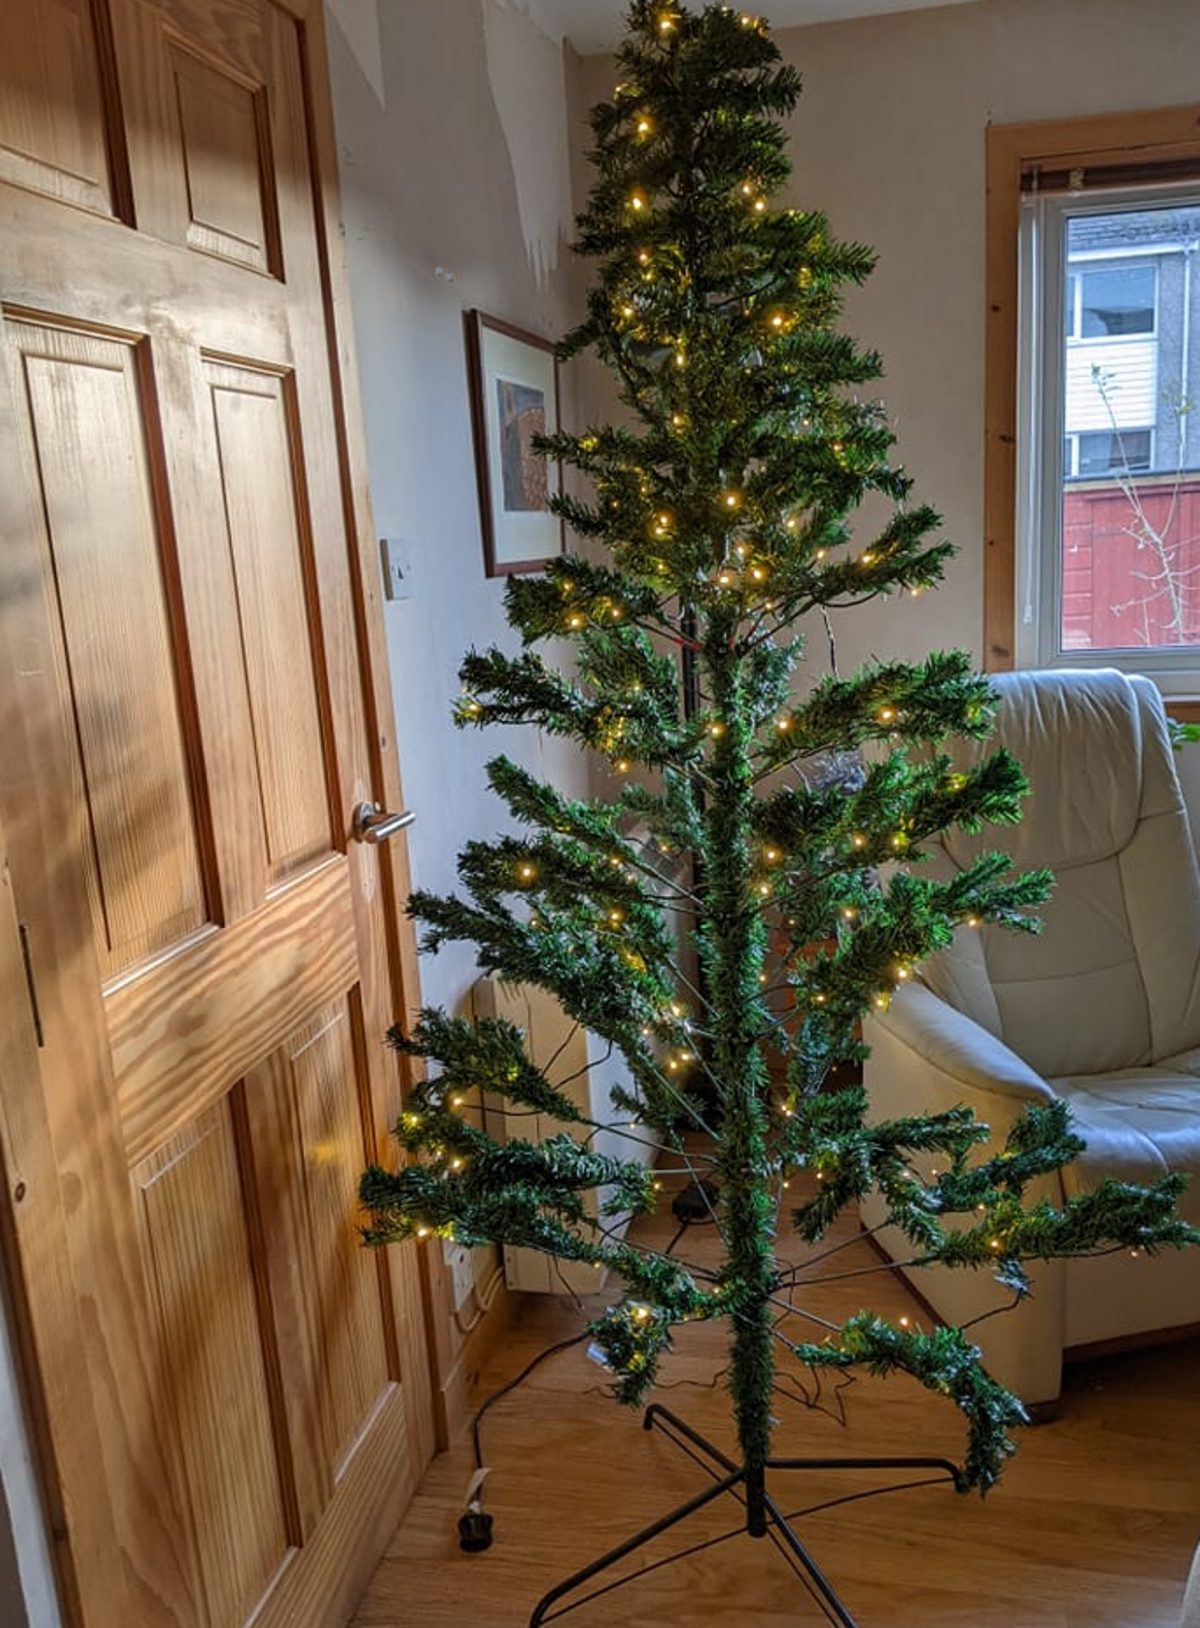 John's Christmas tree 